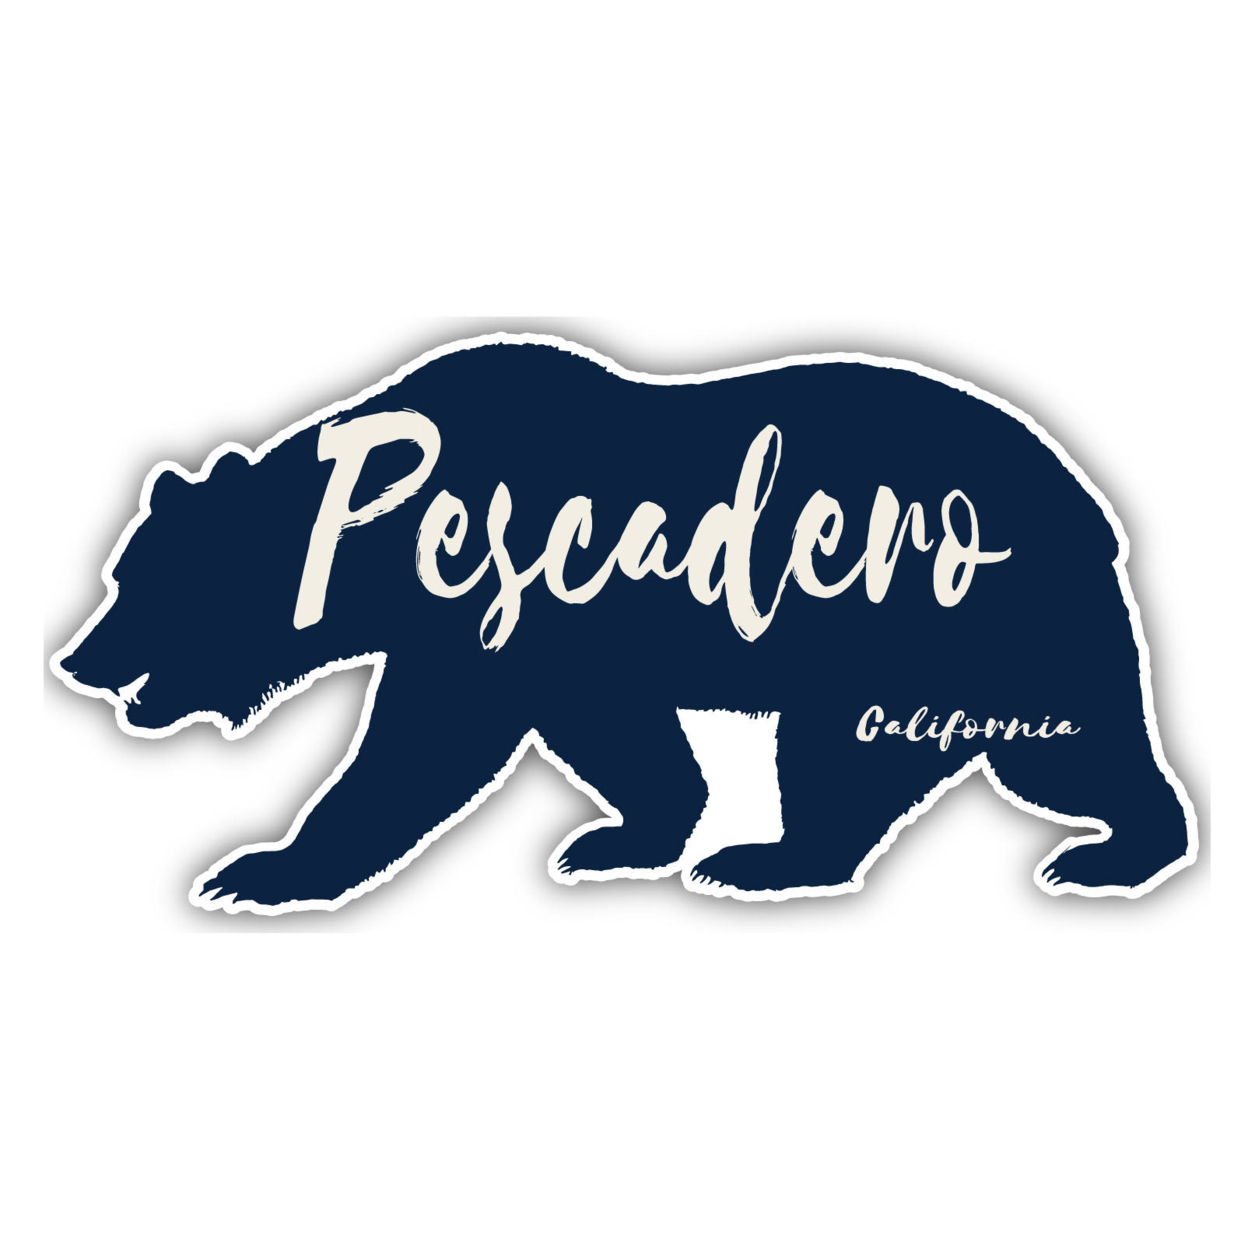 Pescadero California Souvenir Decorative Stickers (Choose Theme And Size) - Single Unit, 2-Inch, Great Outdoors